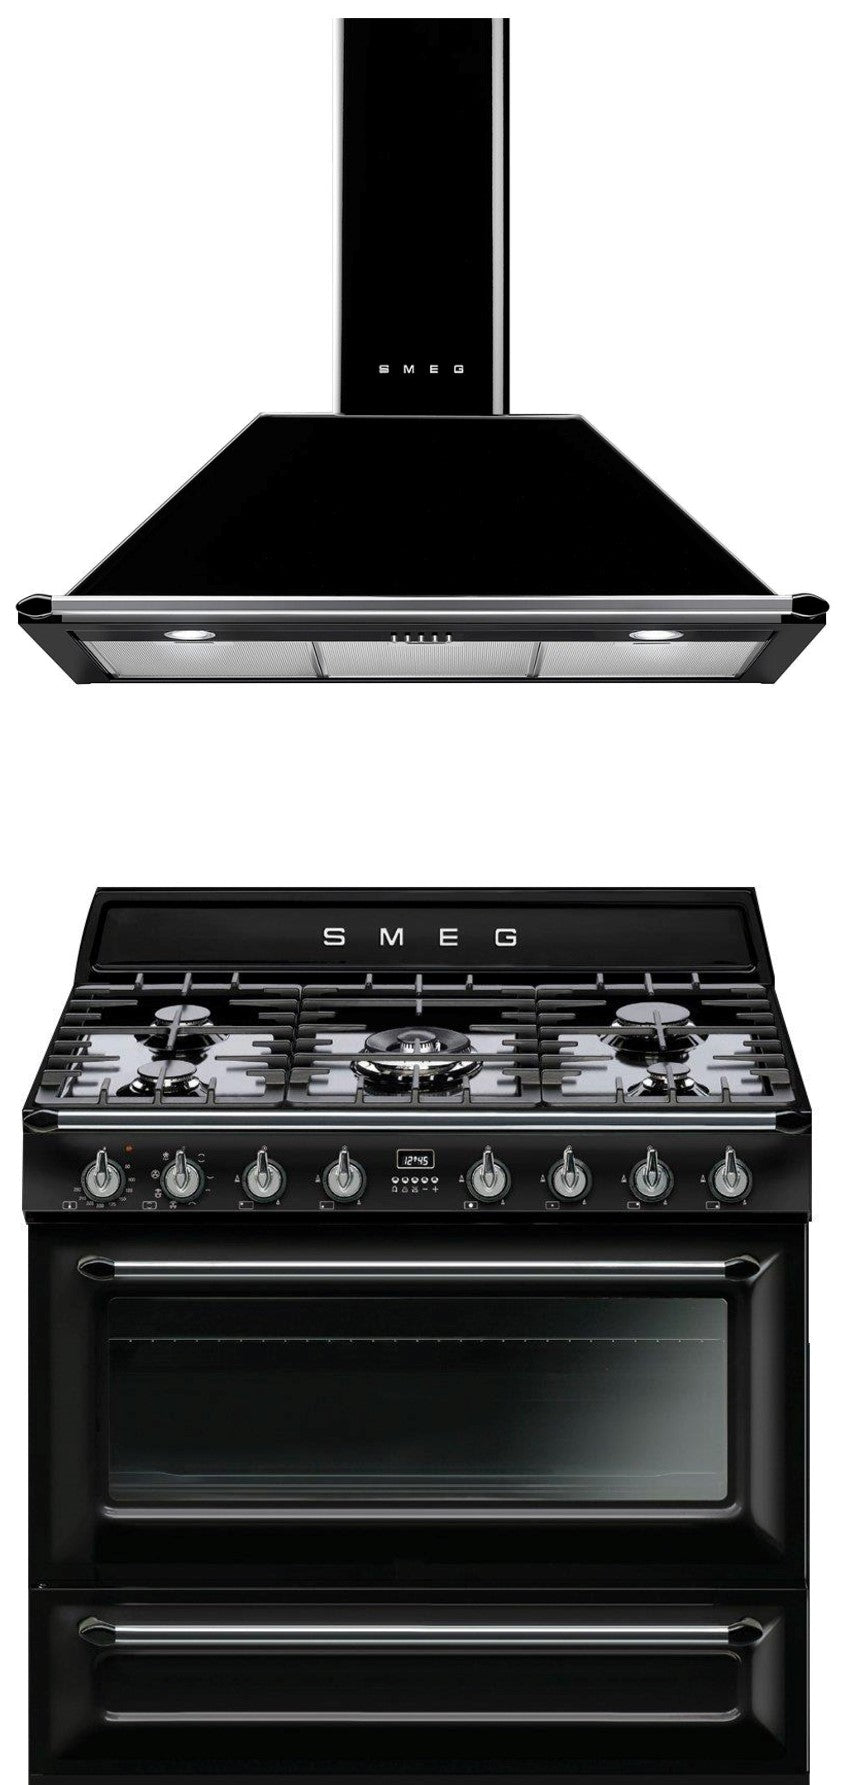 Smeg Black Victoria 90cm Freestanding Oven and Rangehood Bundle - Factory Seconds Discount